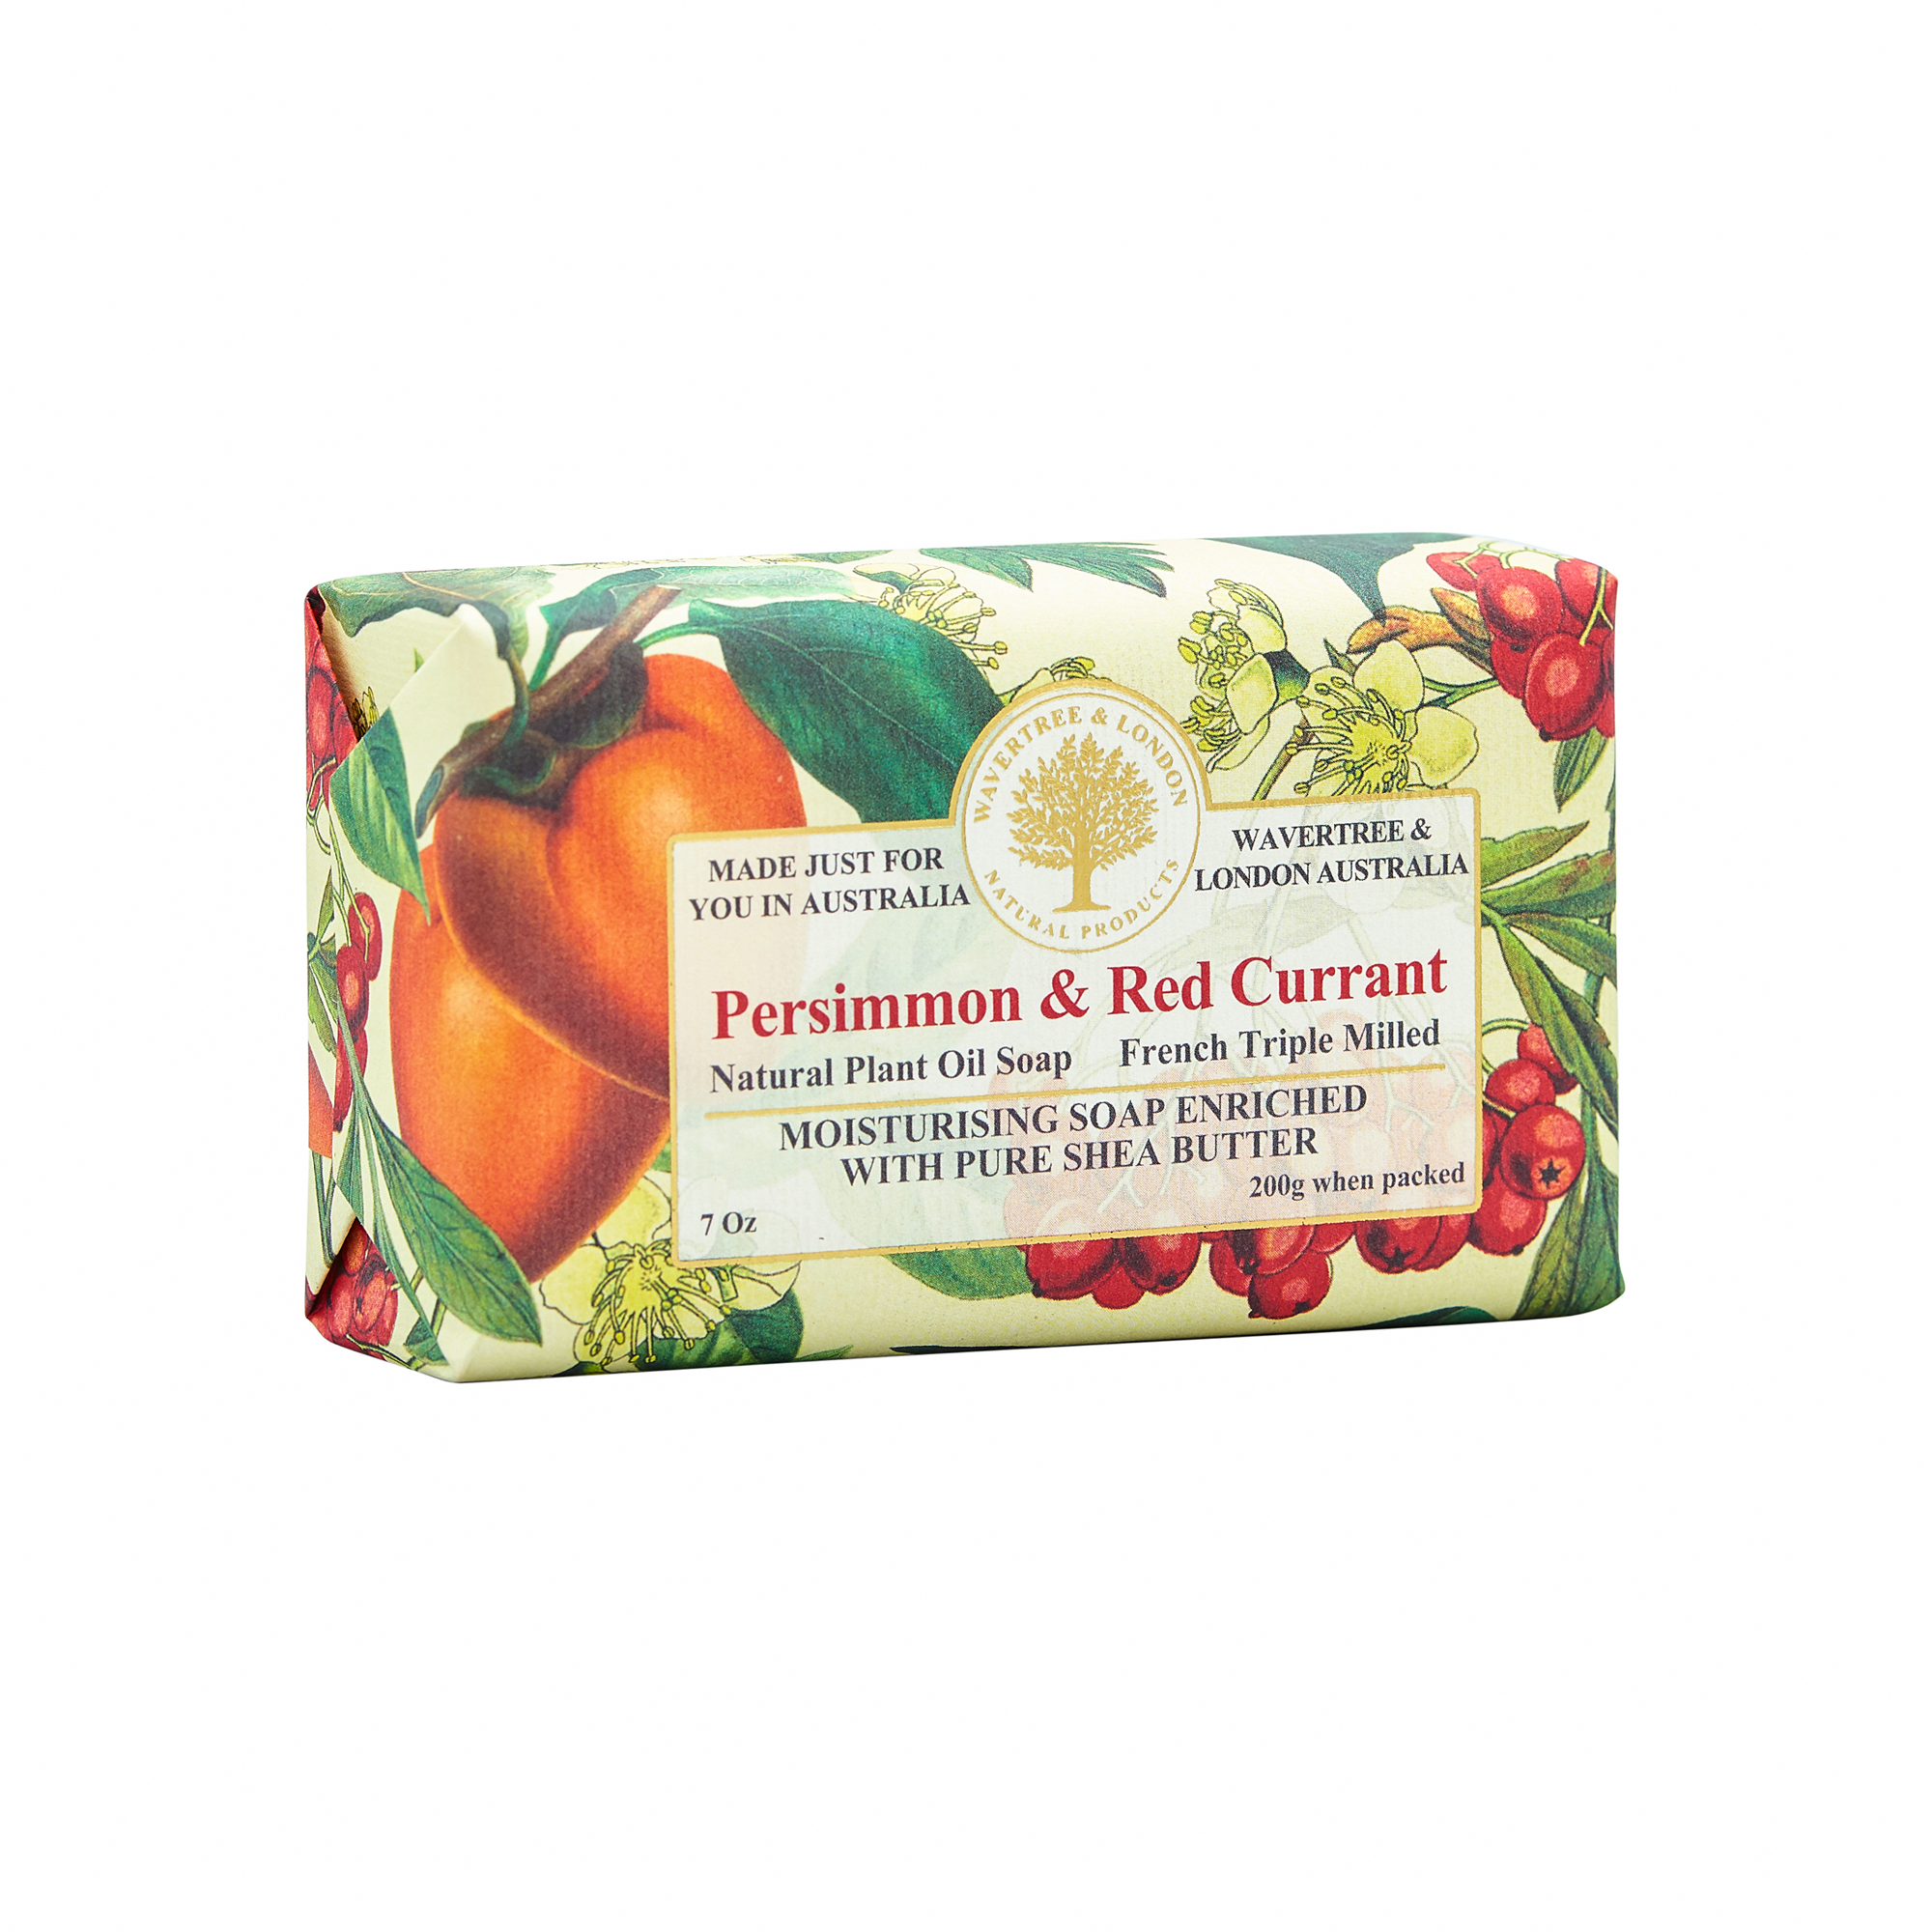 Persimmon & Red Currant Soap Bar carton 8x200g